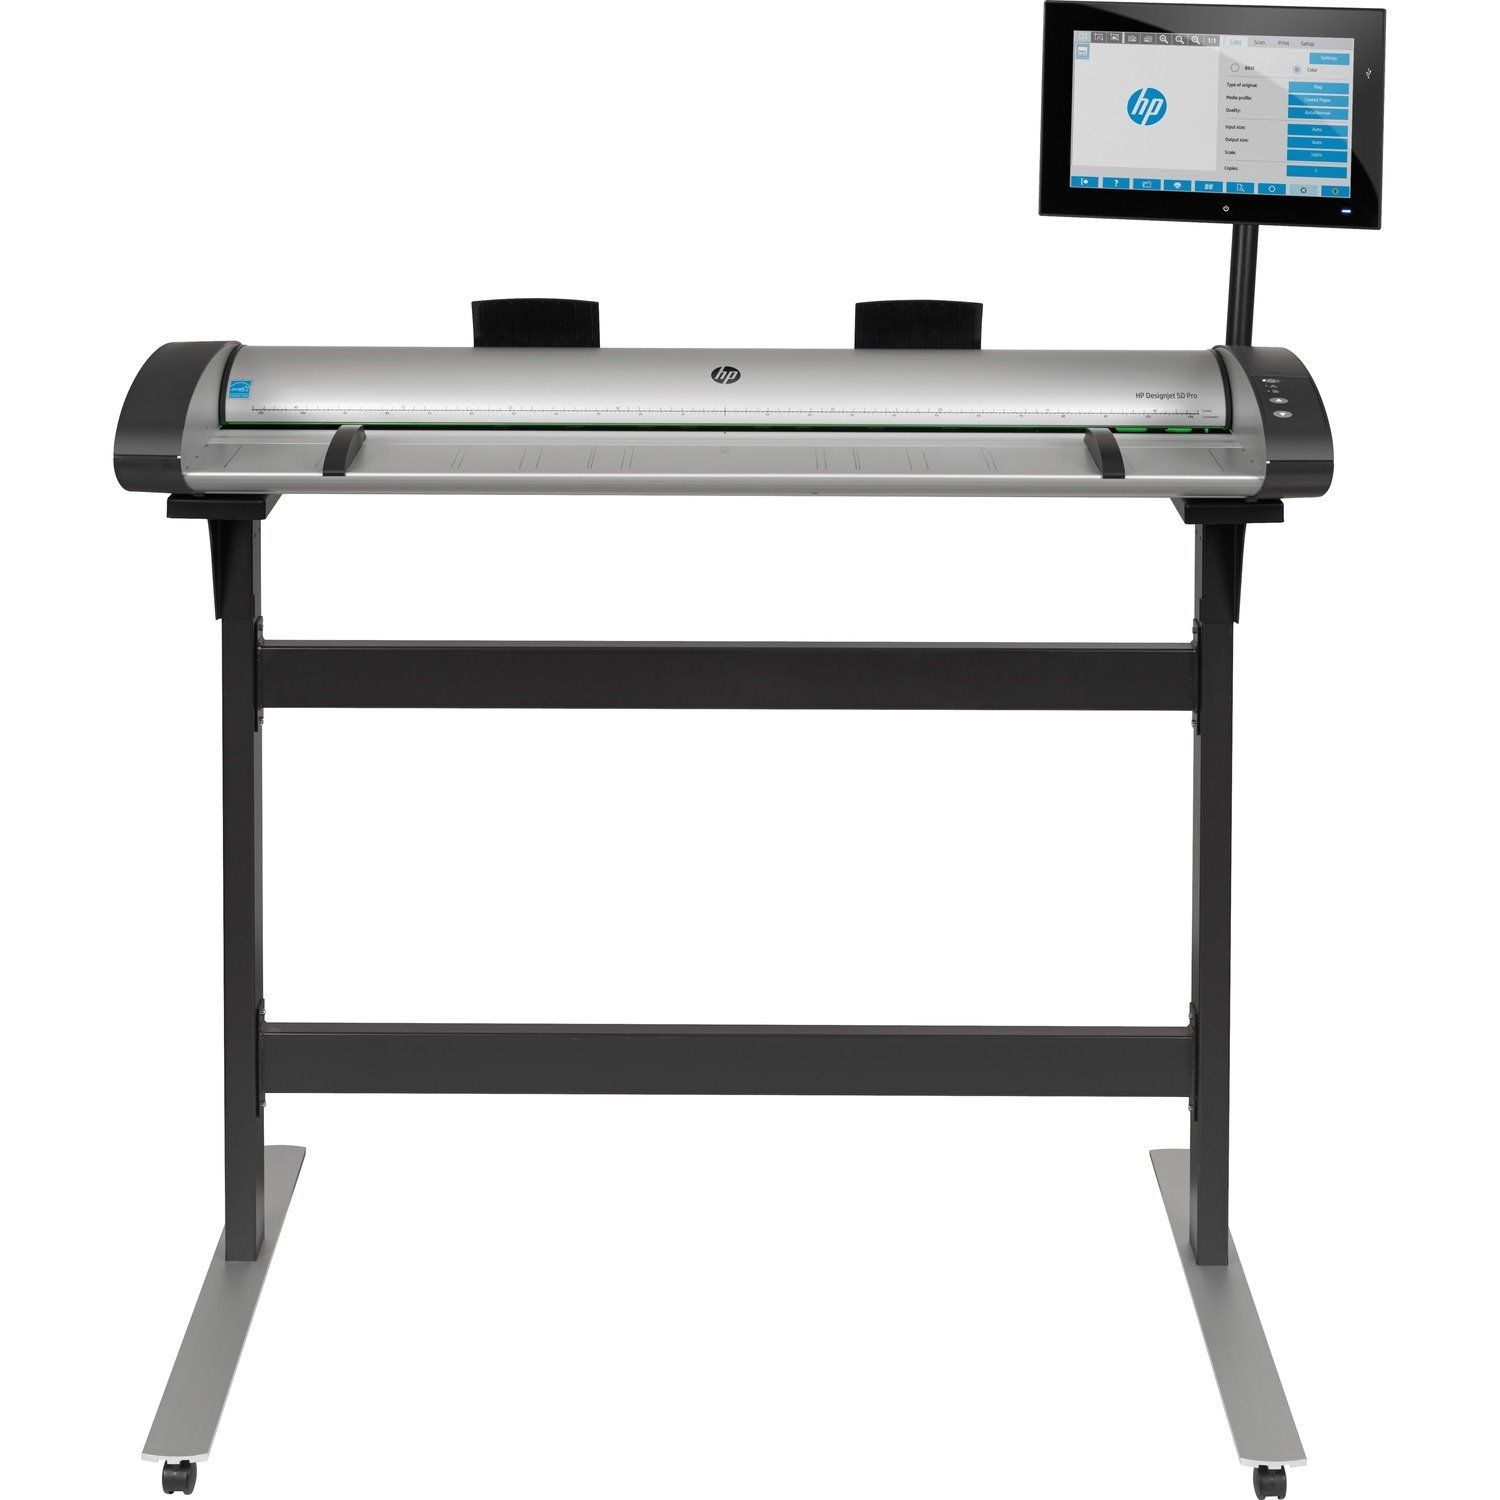 HP SD Pro Large Format Sheetfed Scanner - 1200 dpi Optical